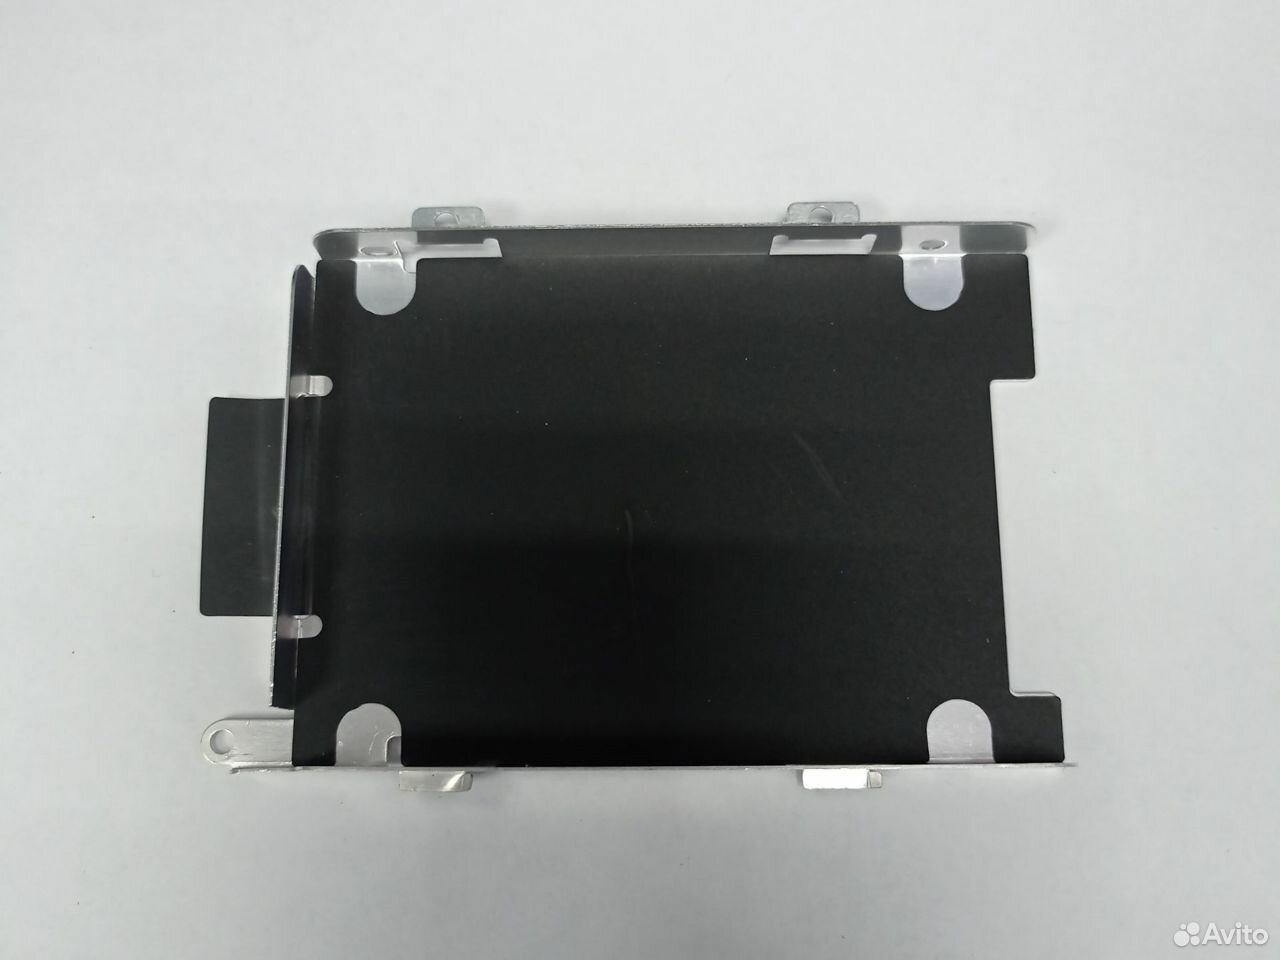 Салазка держатель корзина HDD жёсткого диска для ноутбука ASUS N61D